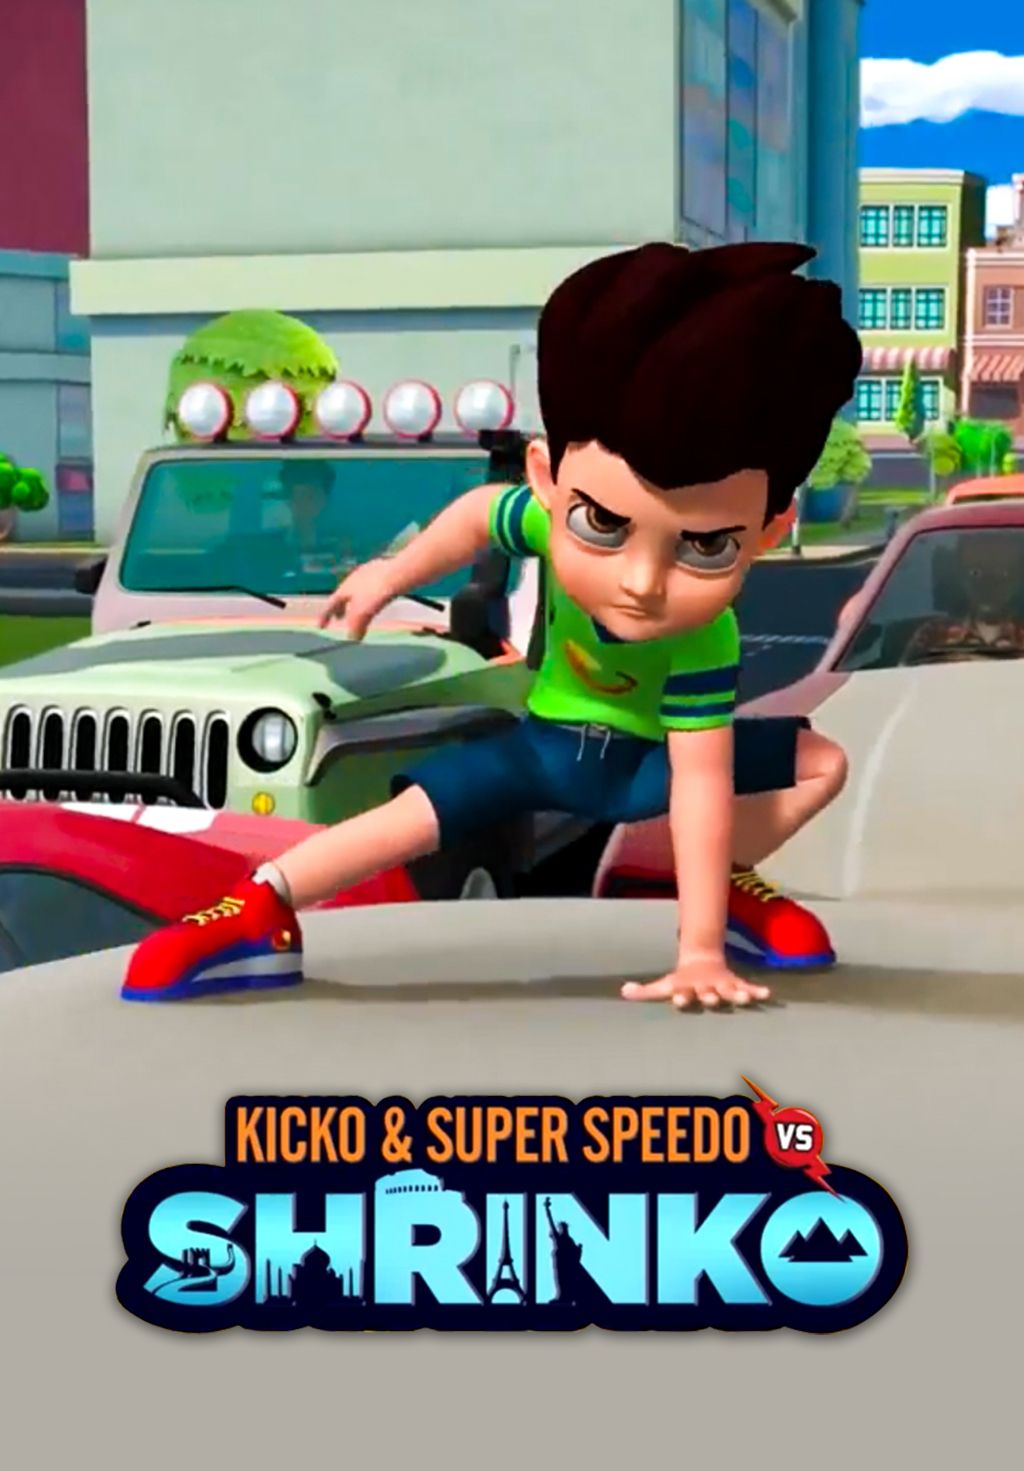 Kicko and Super Speedo Vs Shrinko